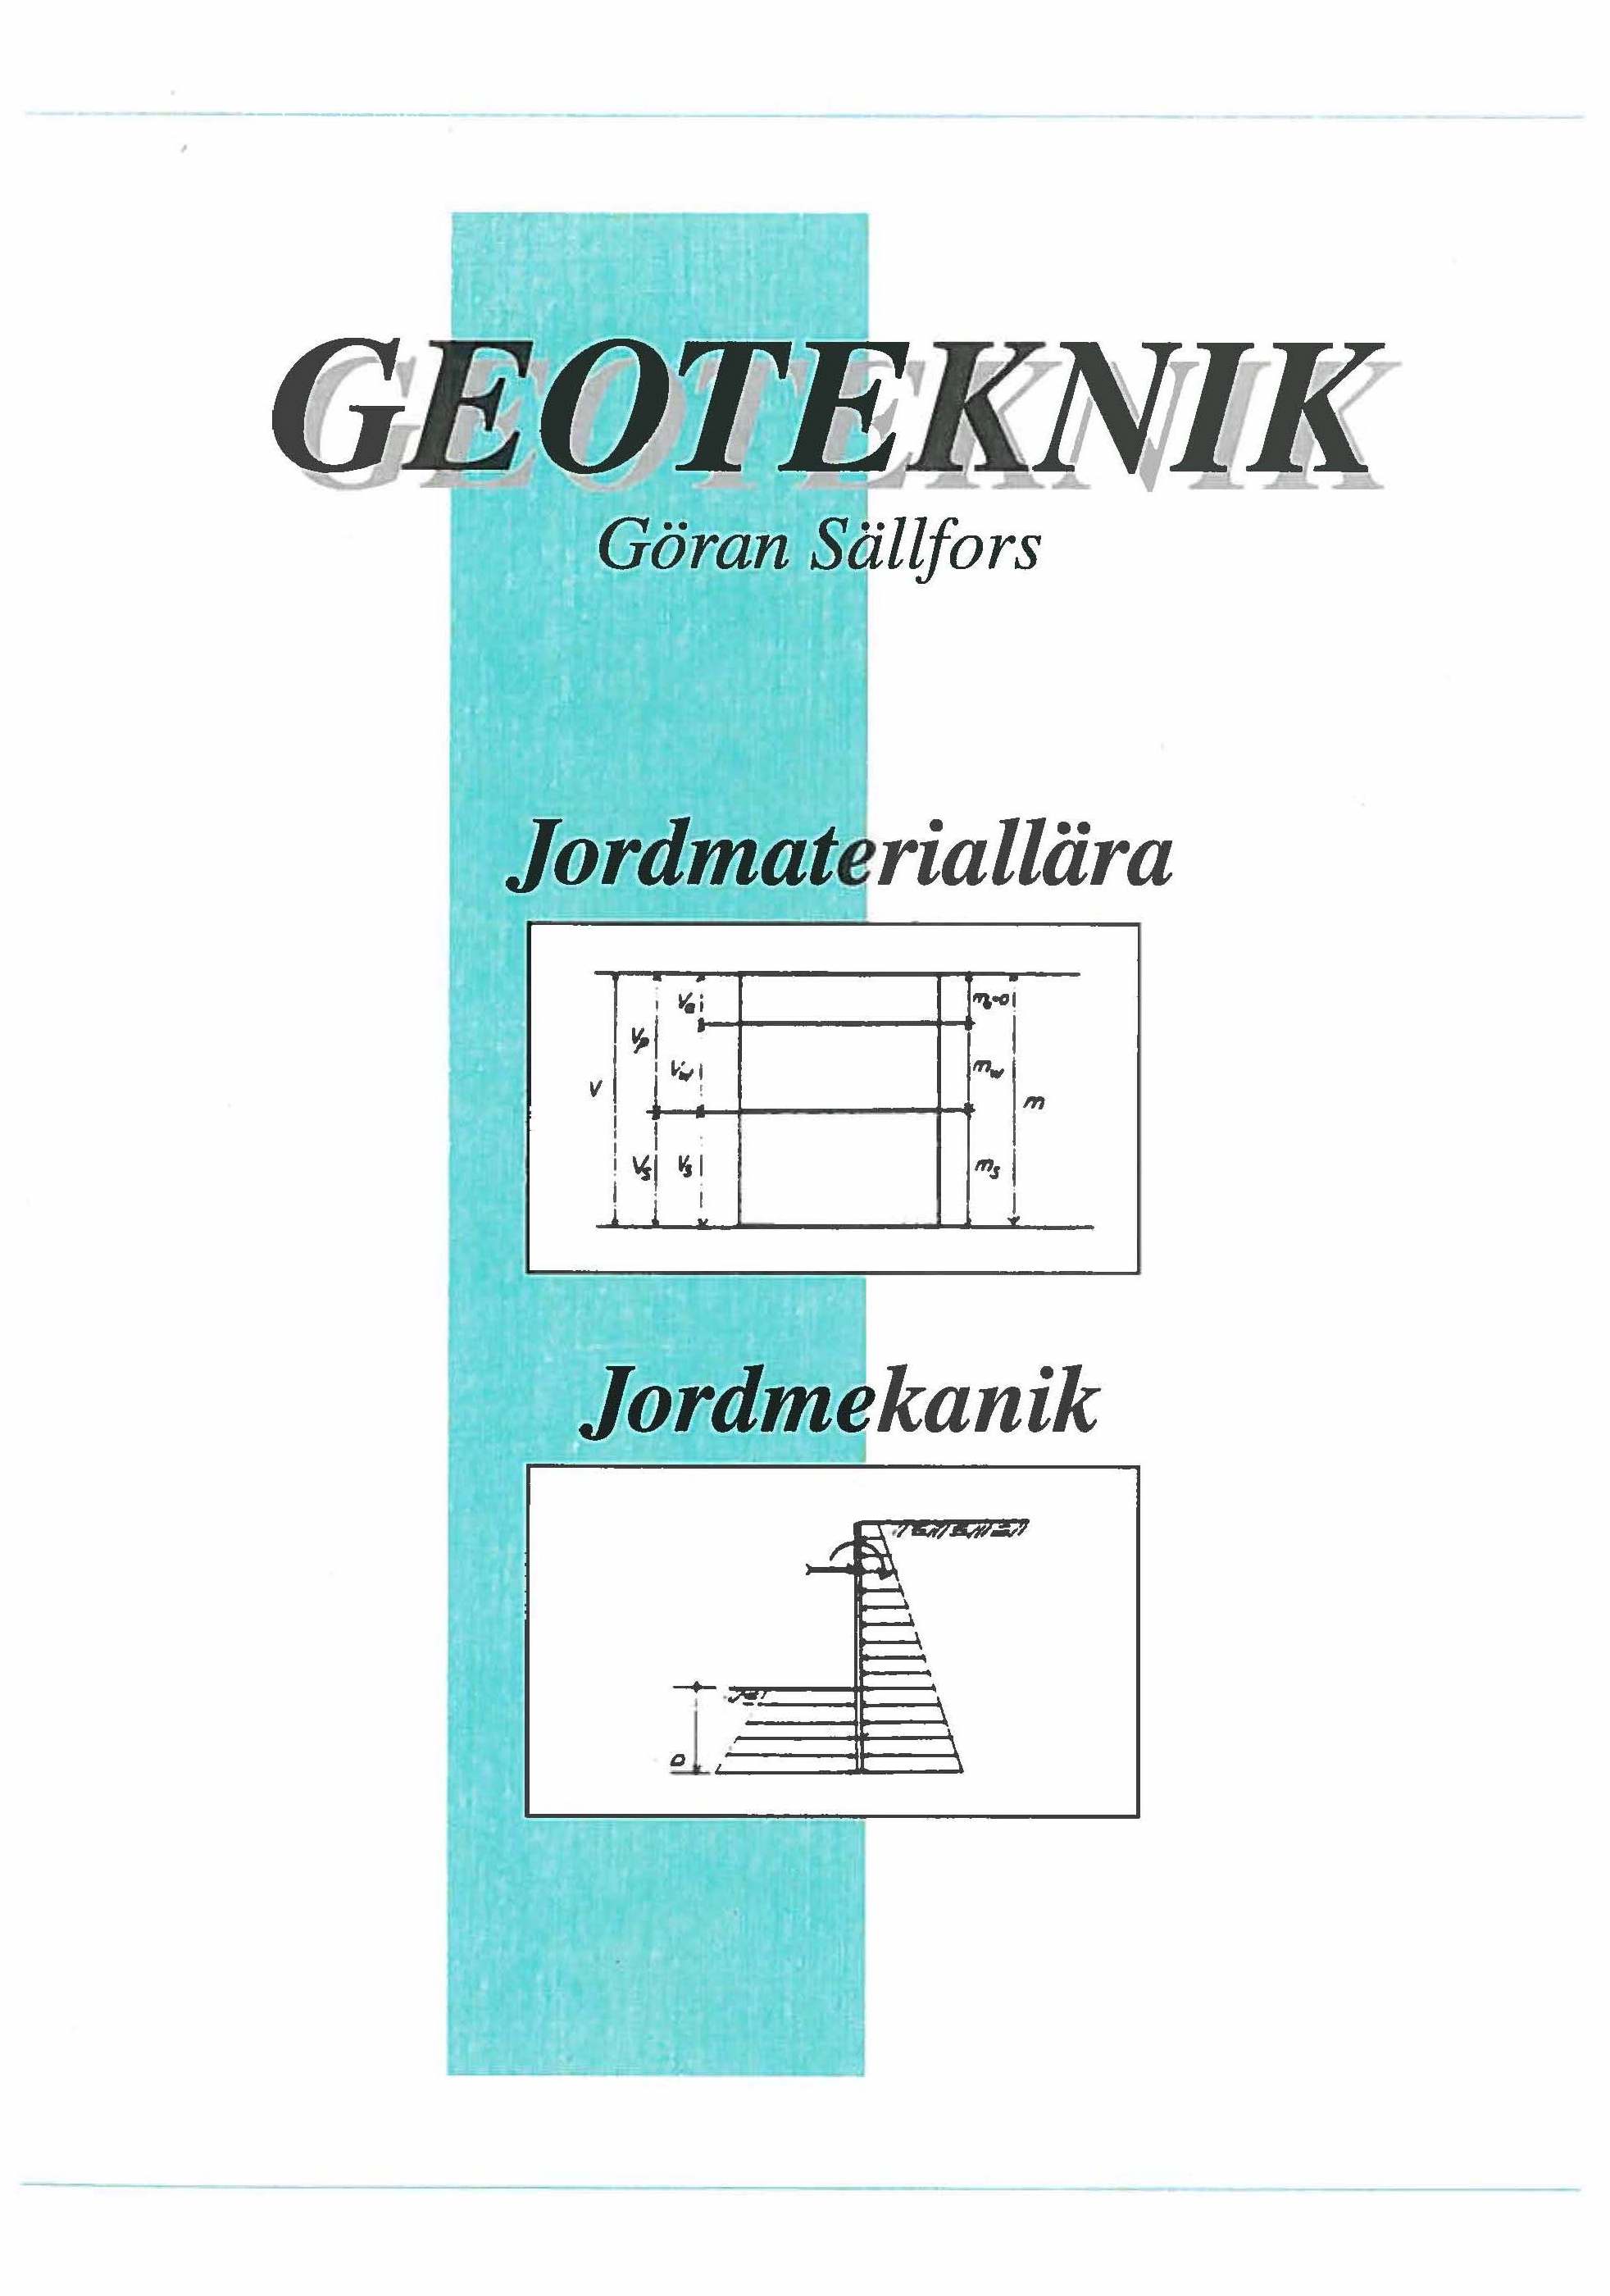 Geoteknik: jordmateriallära, jordmekanik; Göran Sällfors; 2013